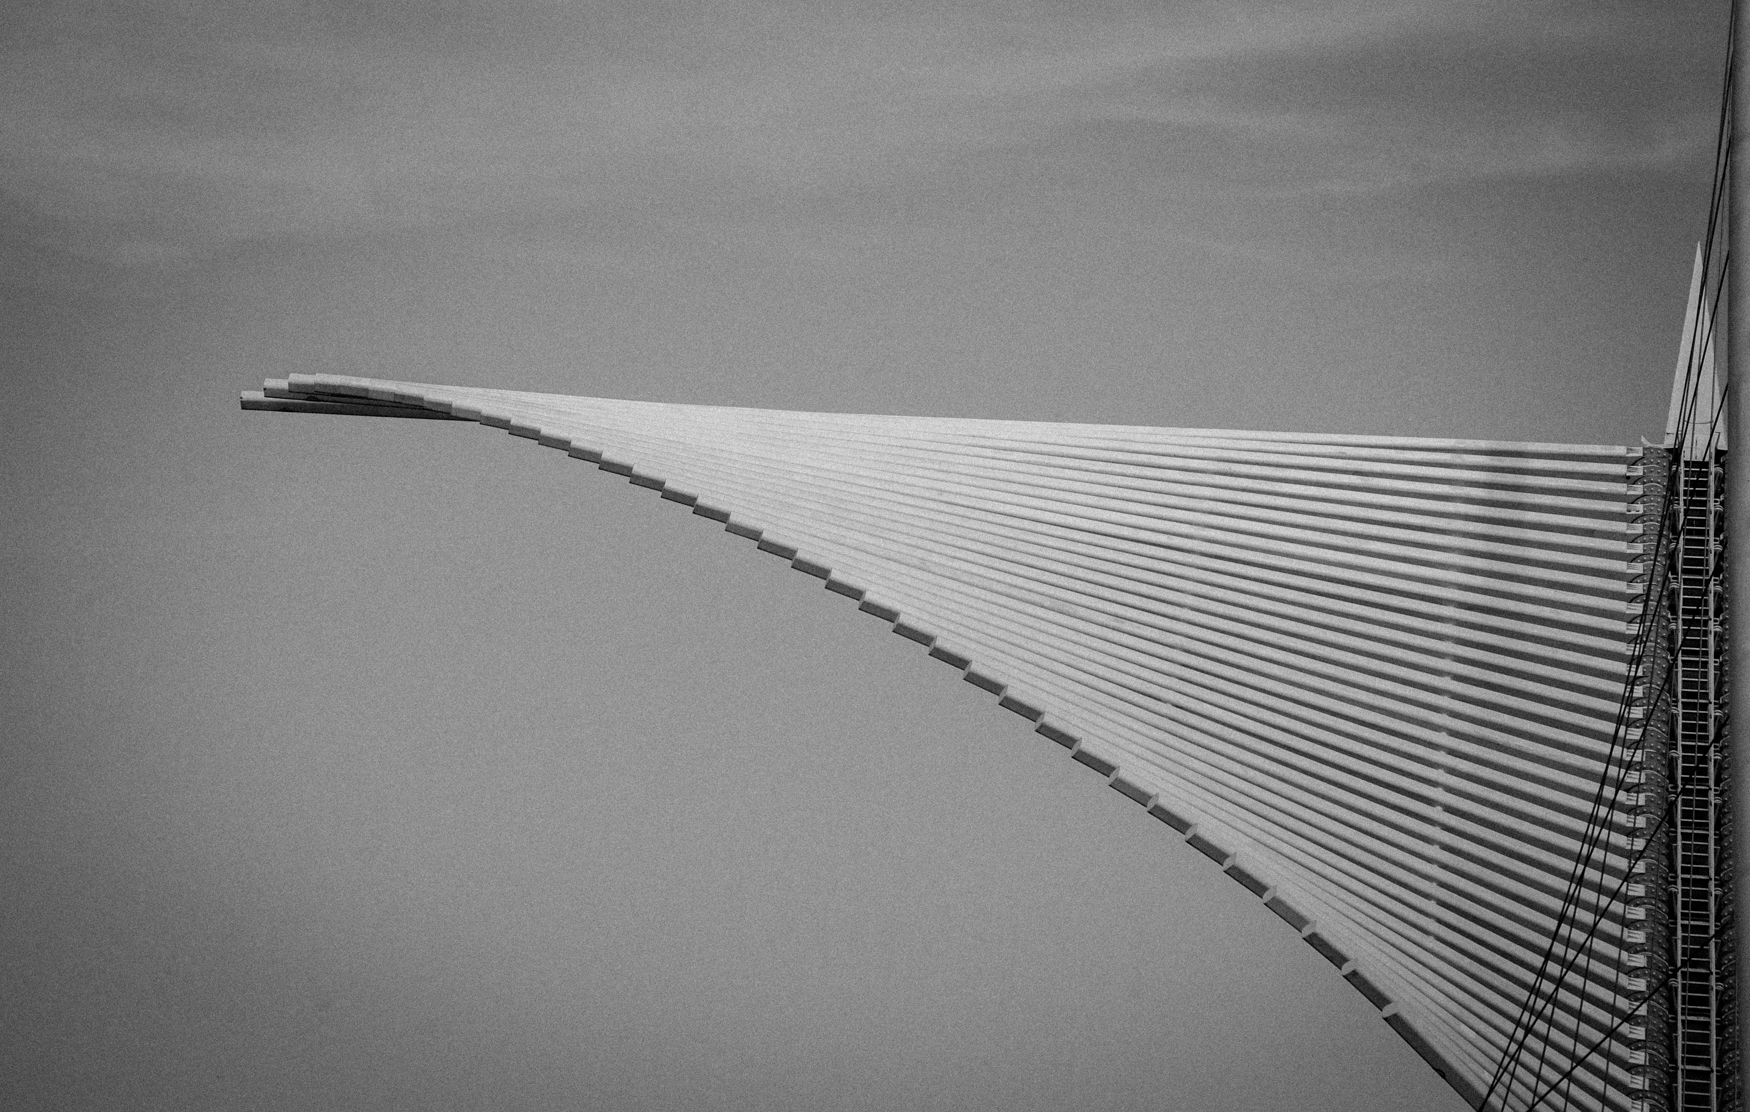 Burke Brise Soleil detail, Milwaukee Art Museum, Santiago Calatrava